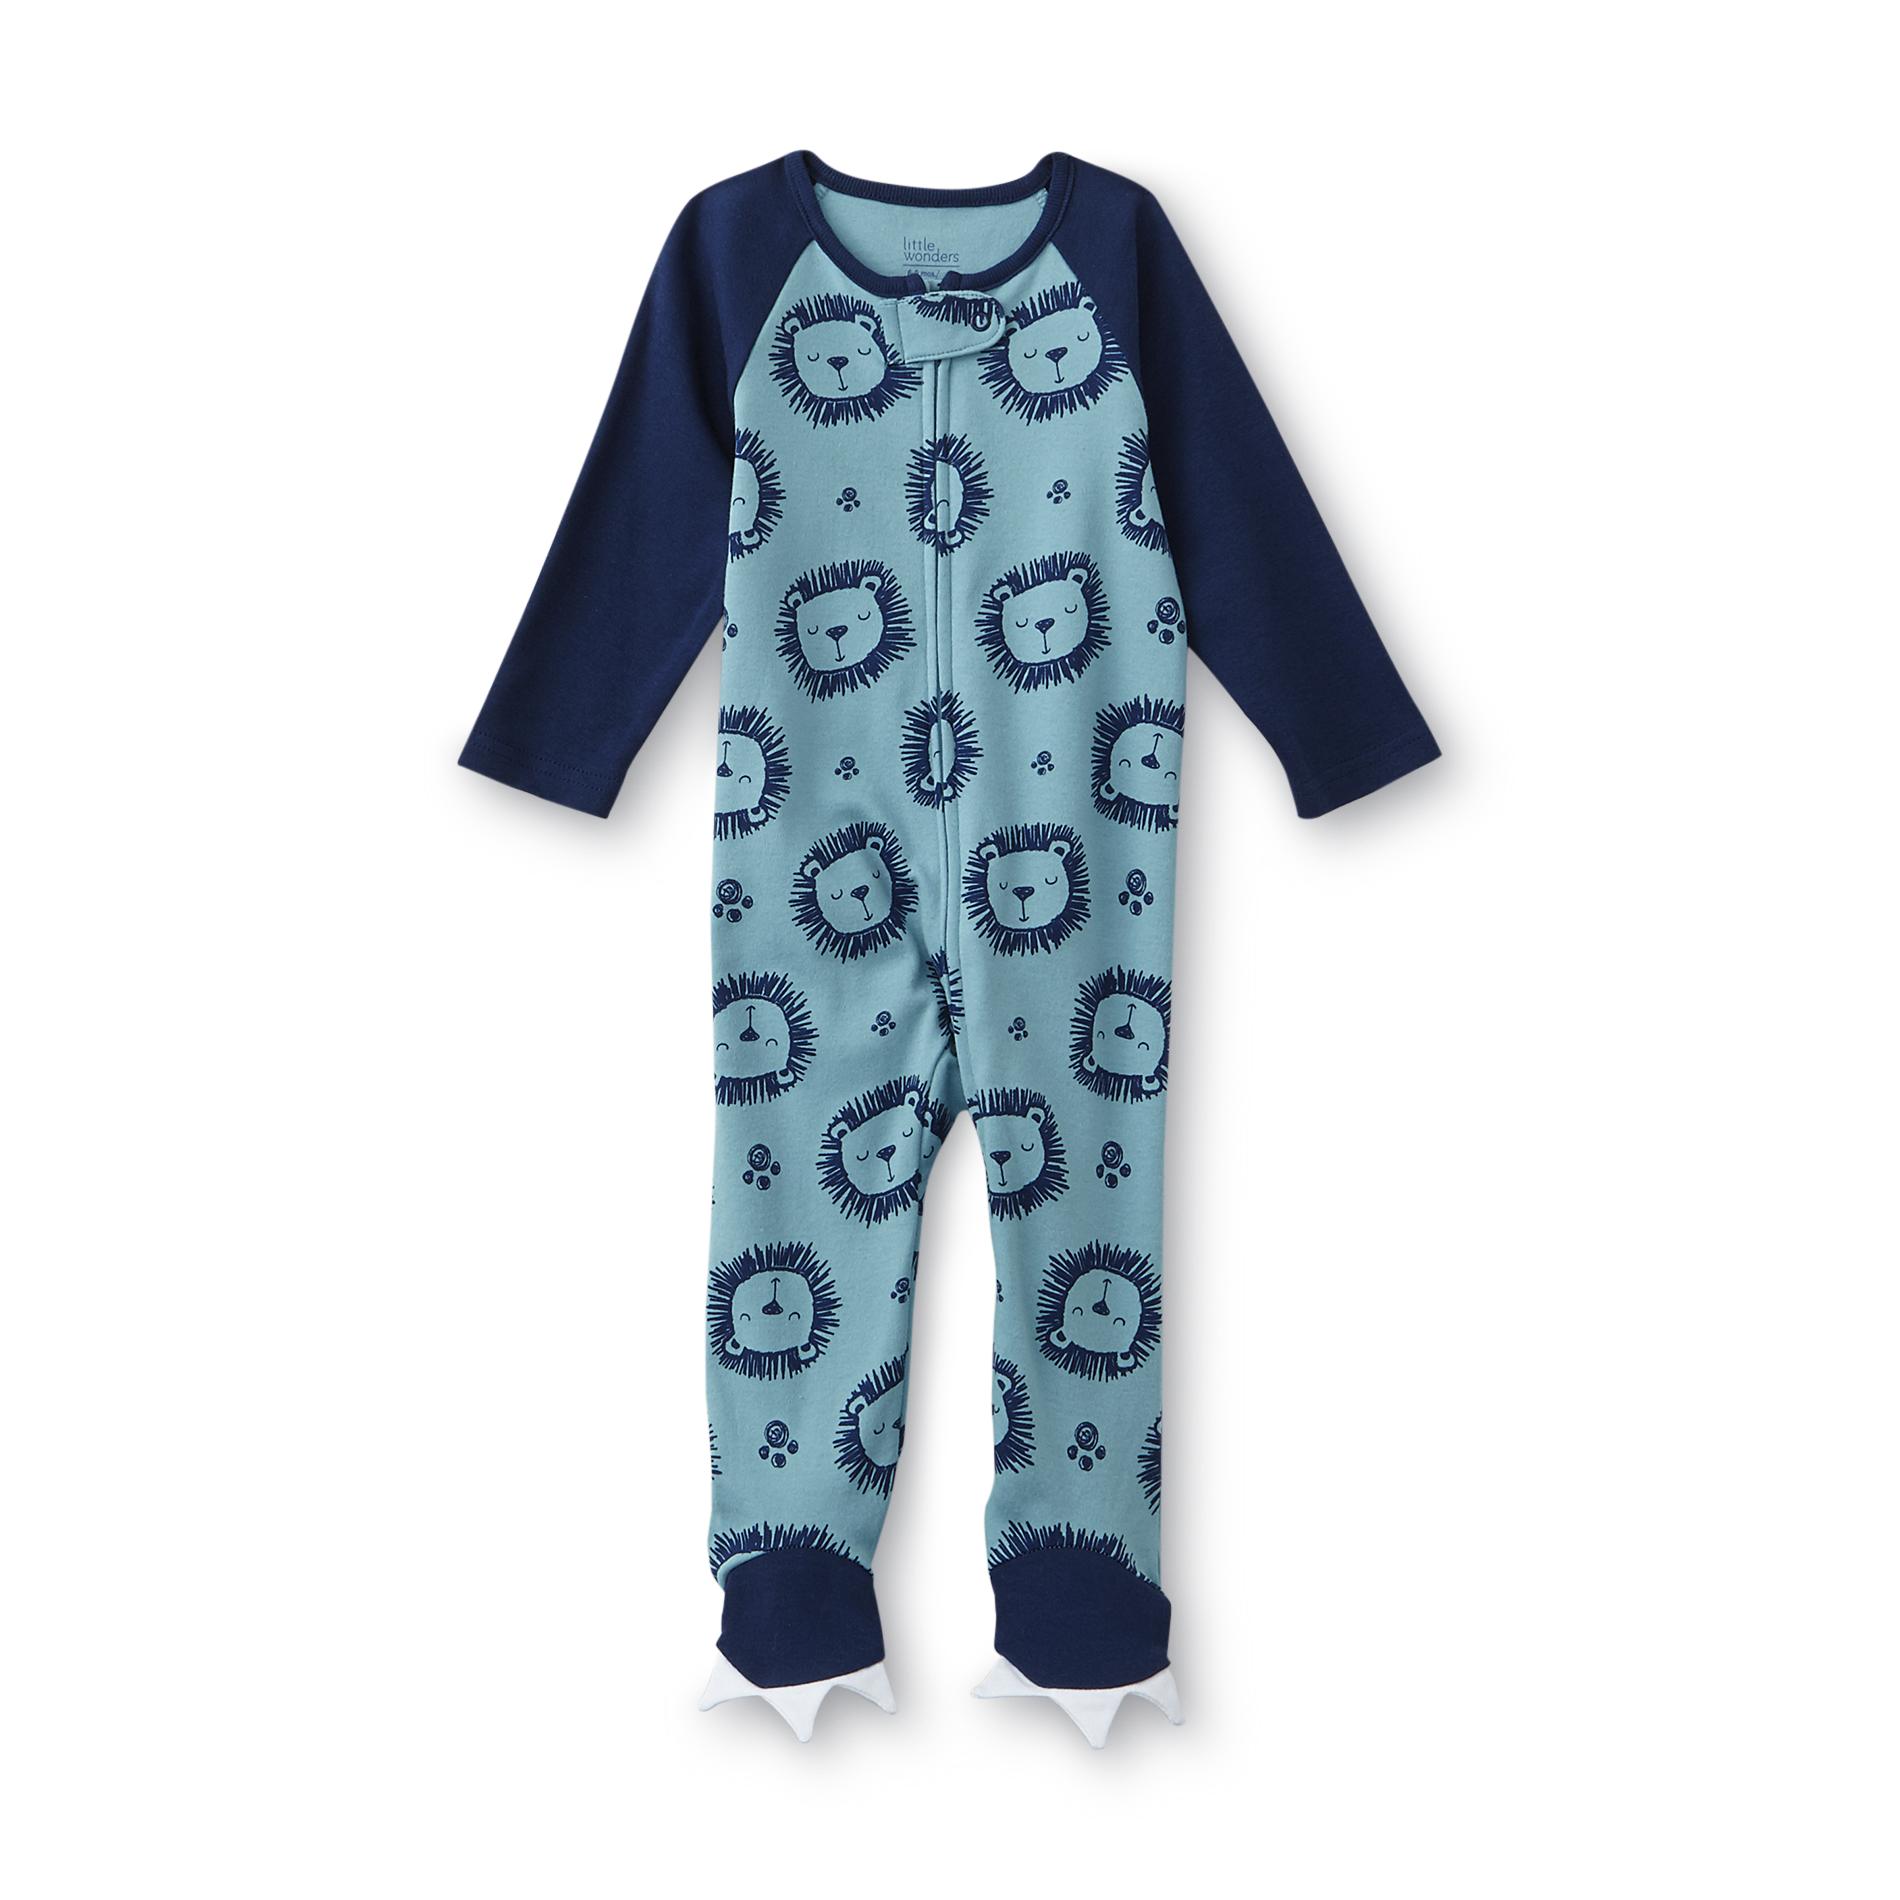 Little Wonders Newborn Boy's Sleeper Pajamas - Lions